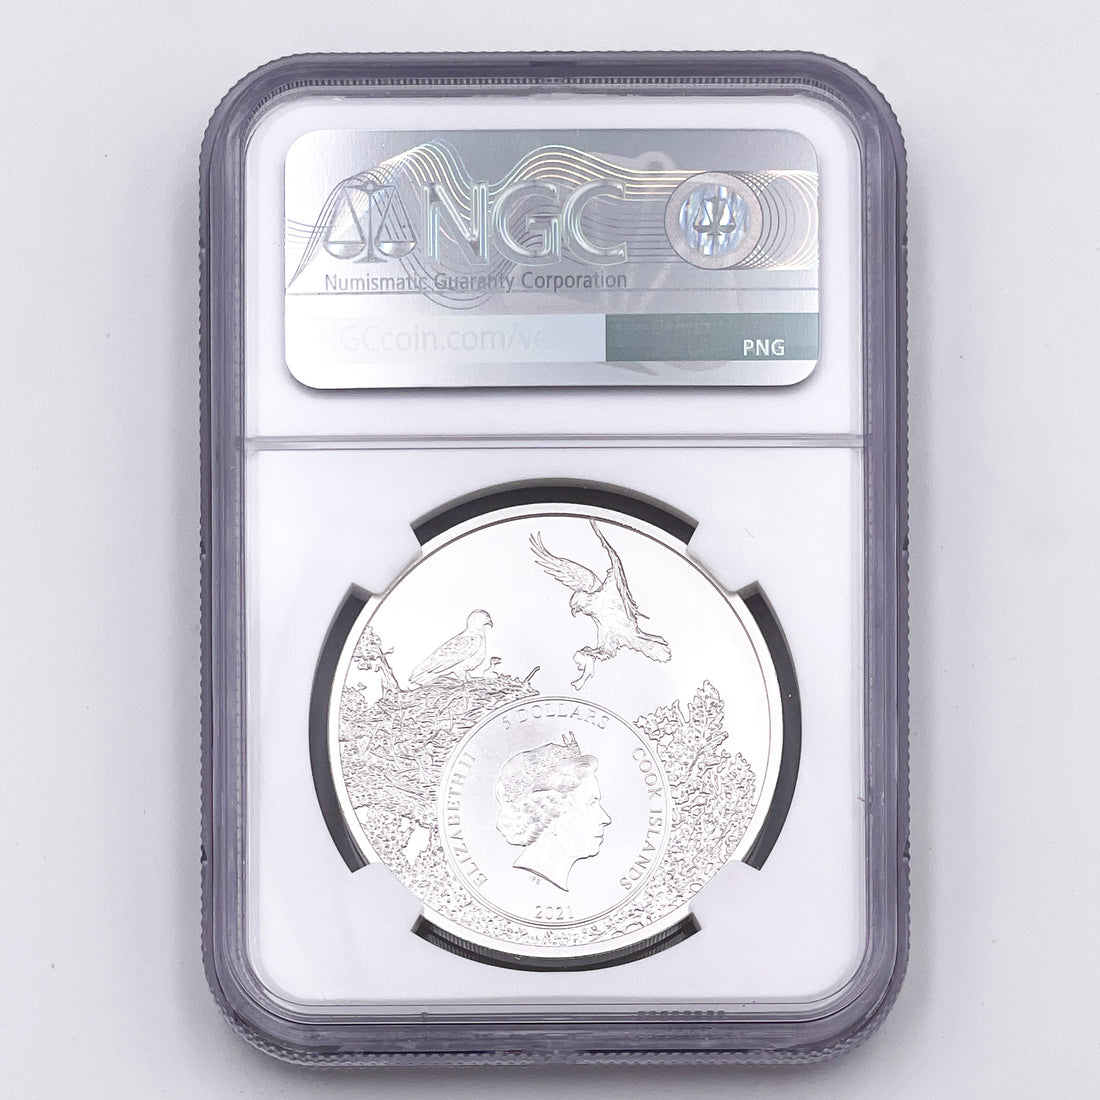 2021 Cook Islands ALASKA BOWHEAD WHALE MS 70 1oz Silver Coin U.S. State Animal Series - OZB